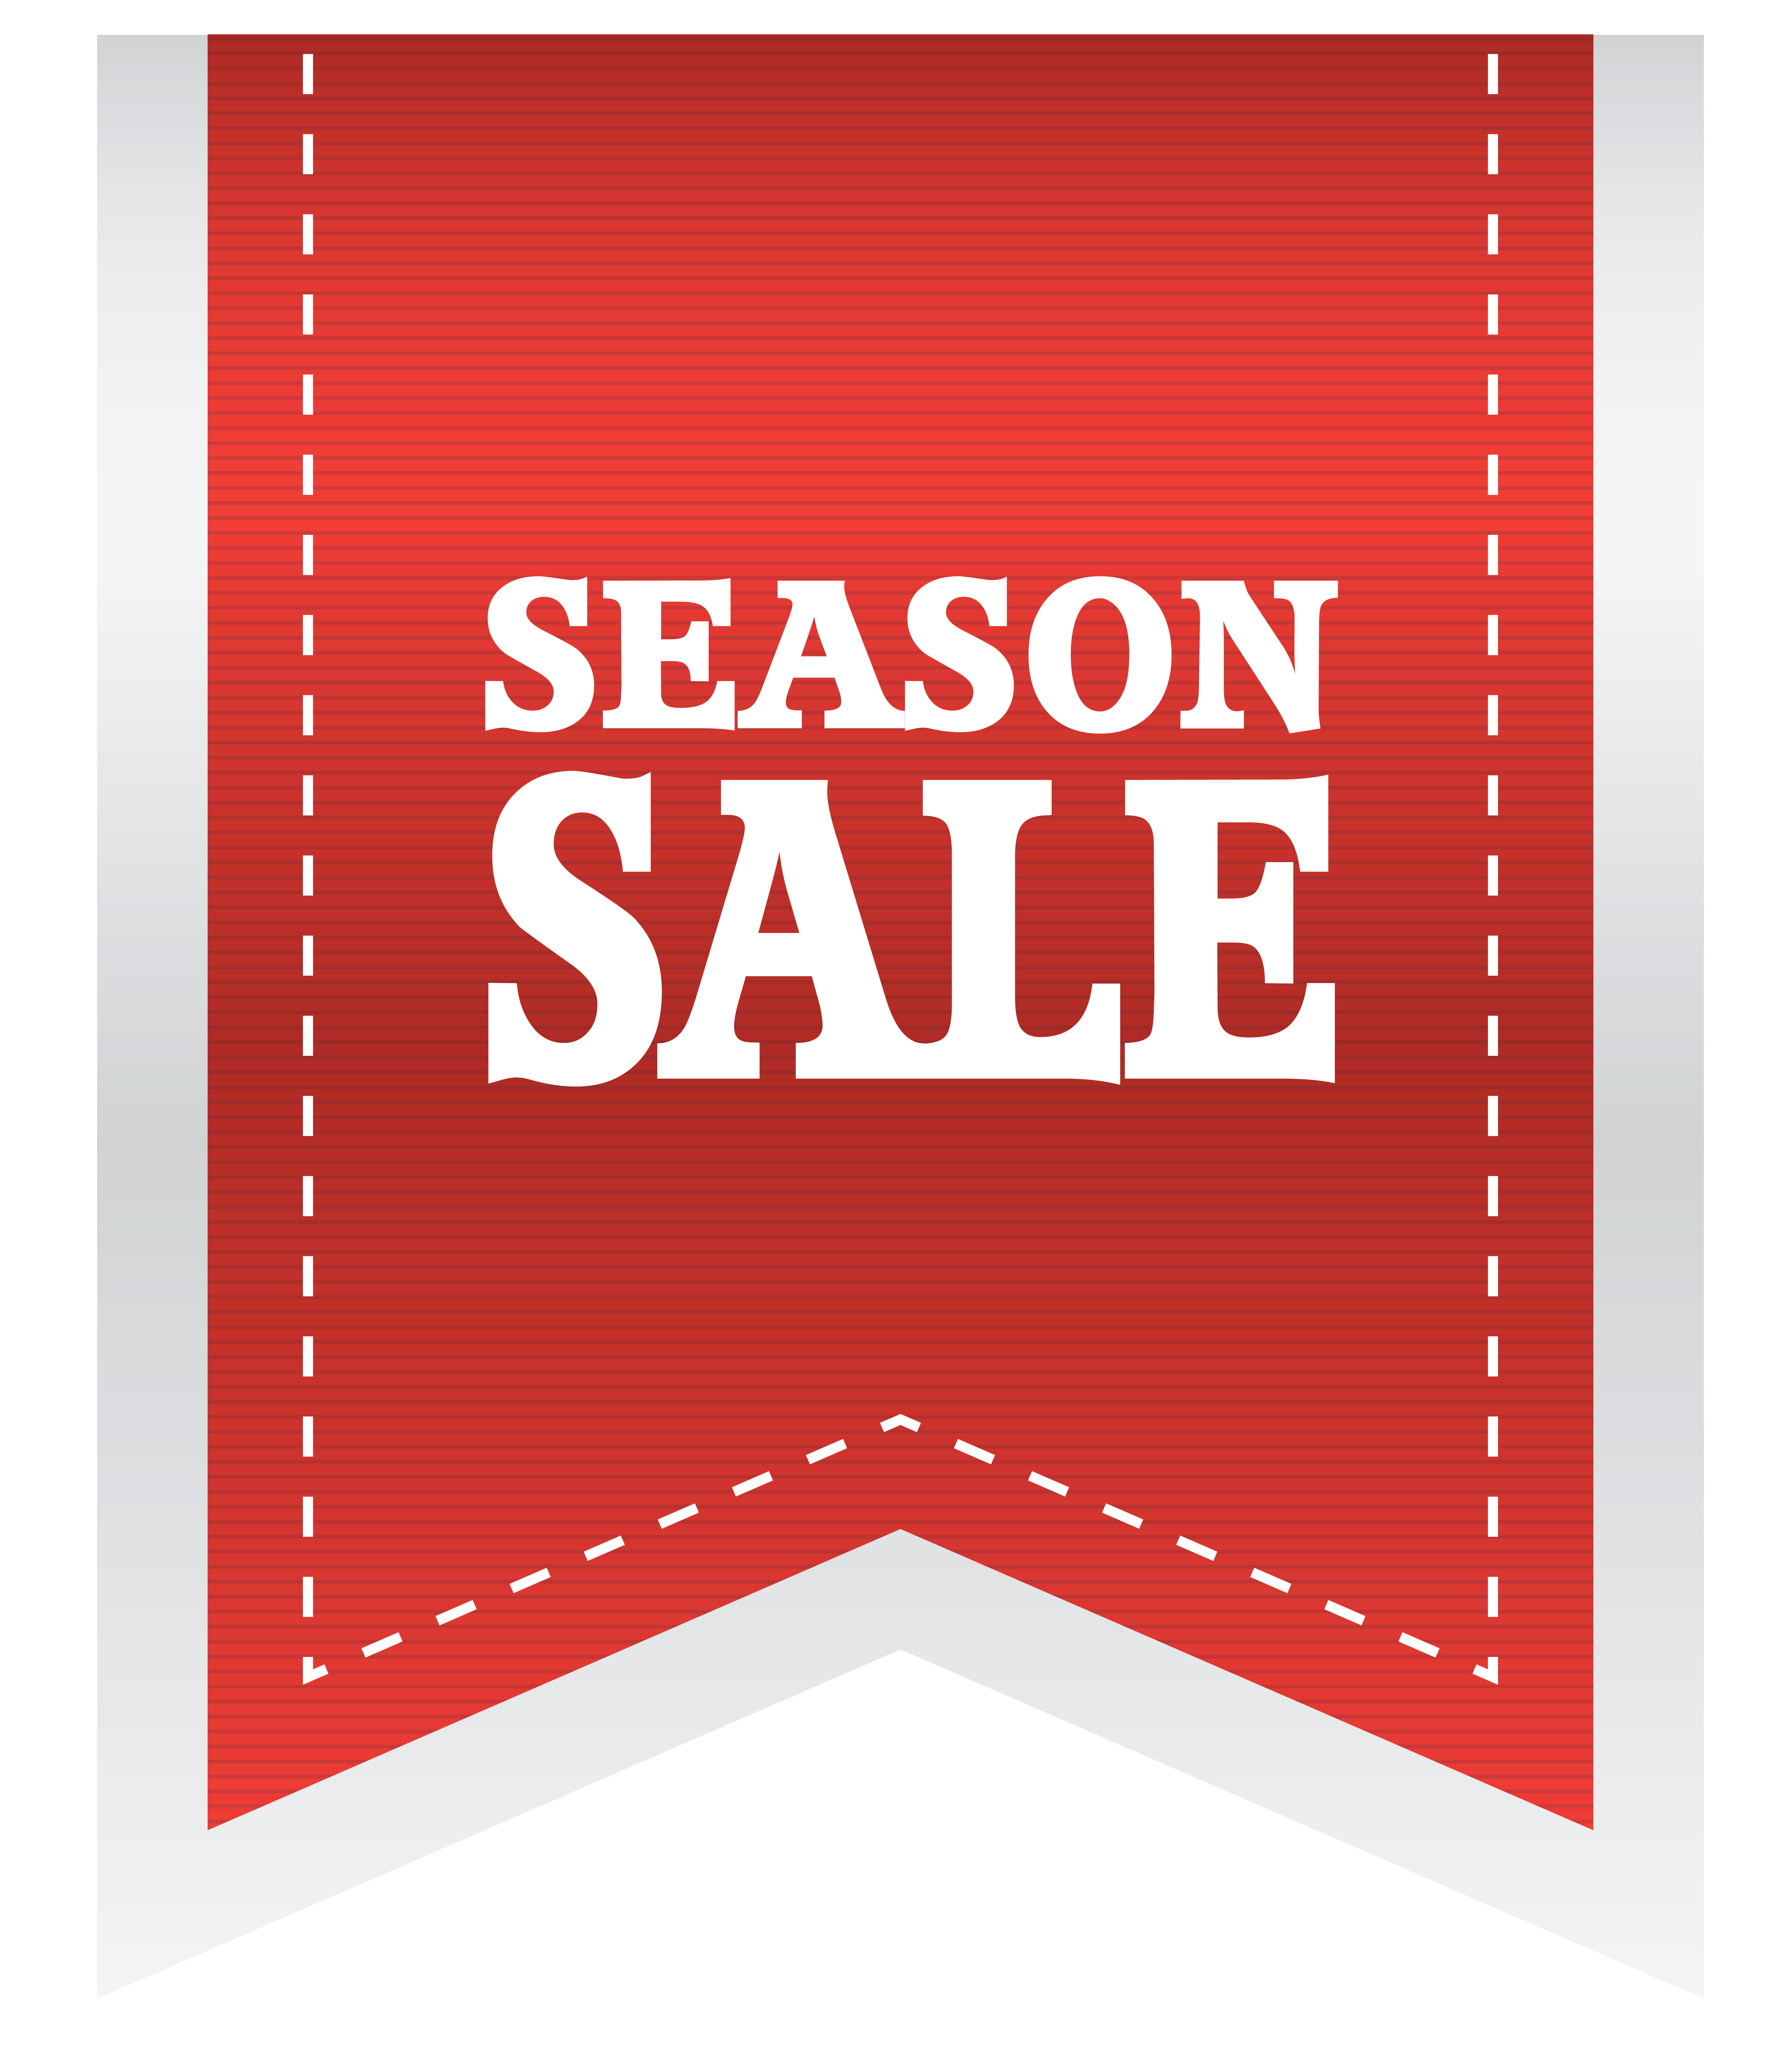 Picture Epson Icon Season Sale Sales Label PNG Image